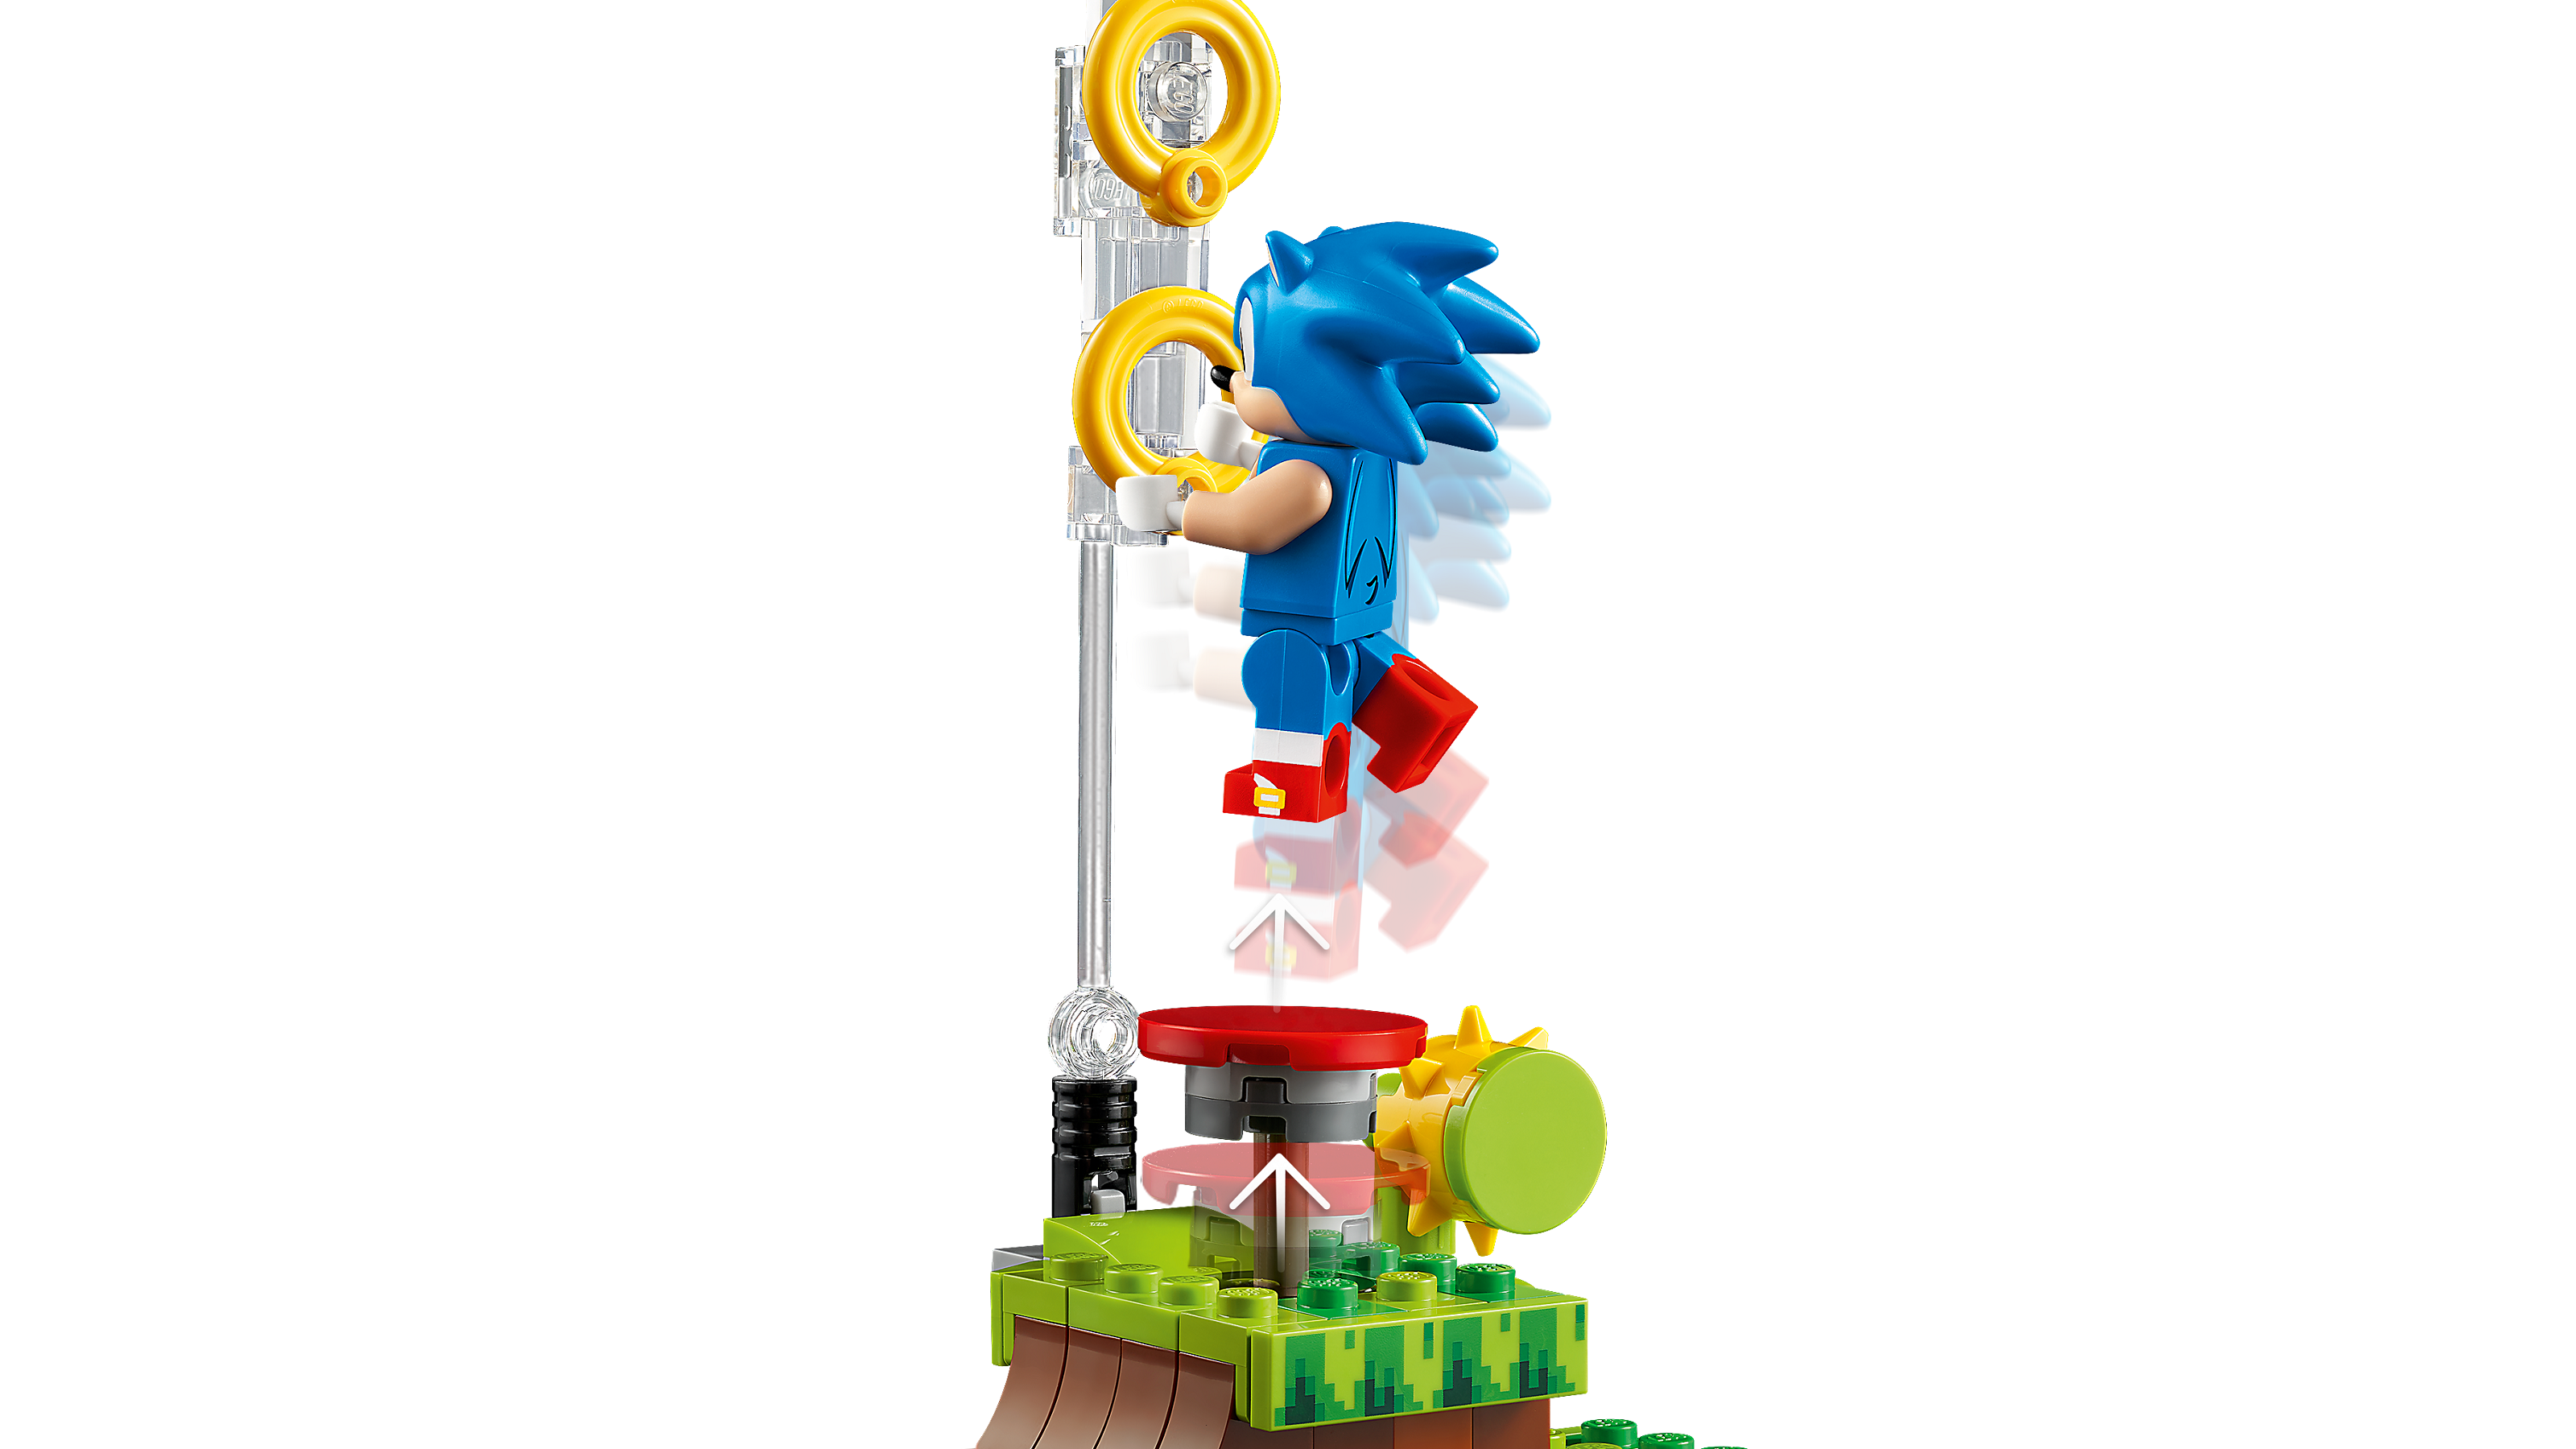 Lego de montar turma Do Sonic.